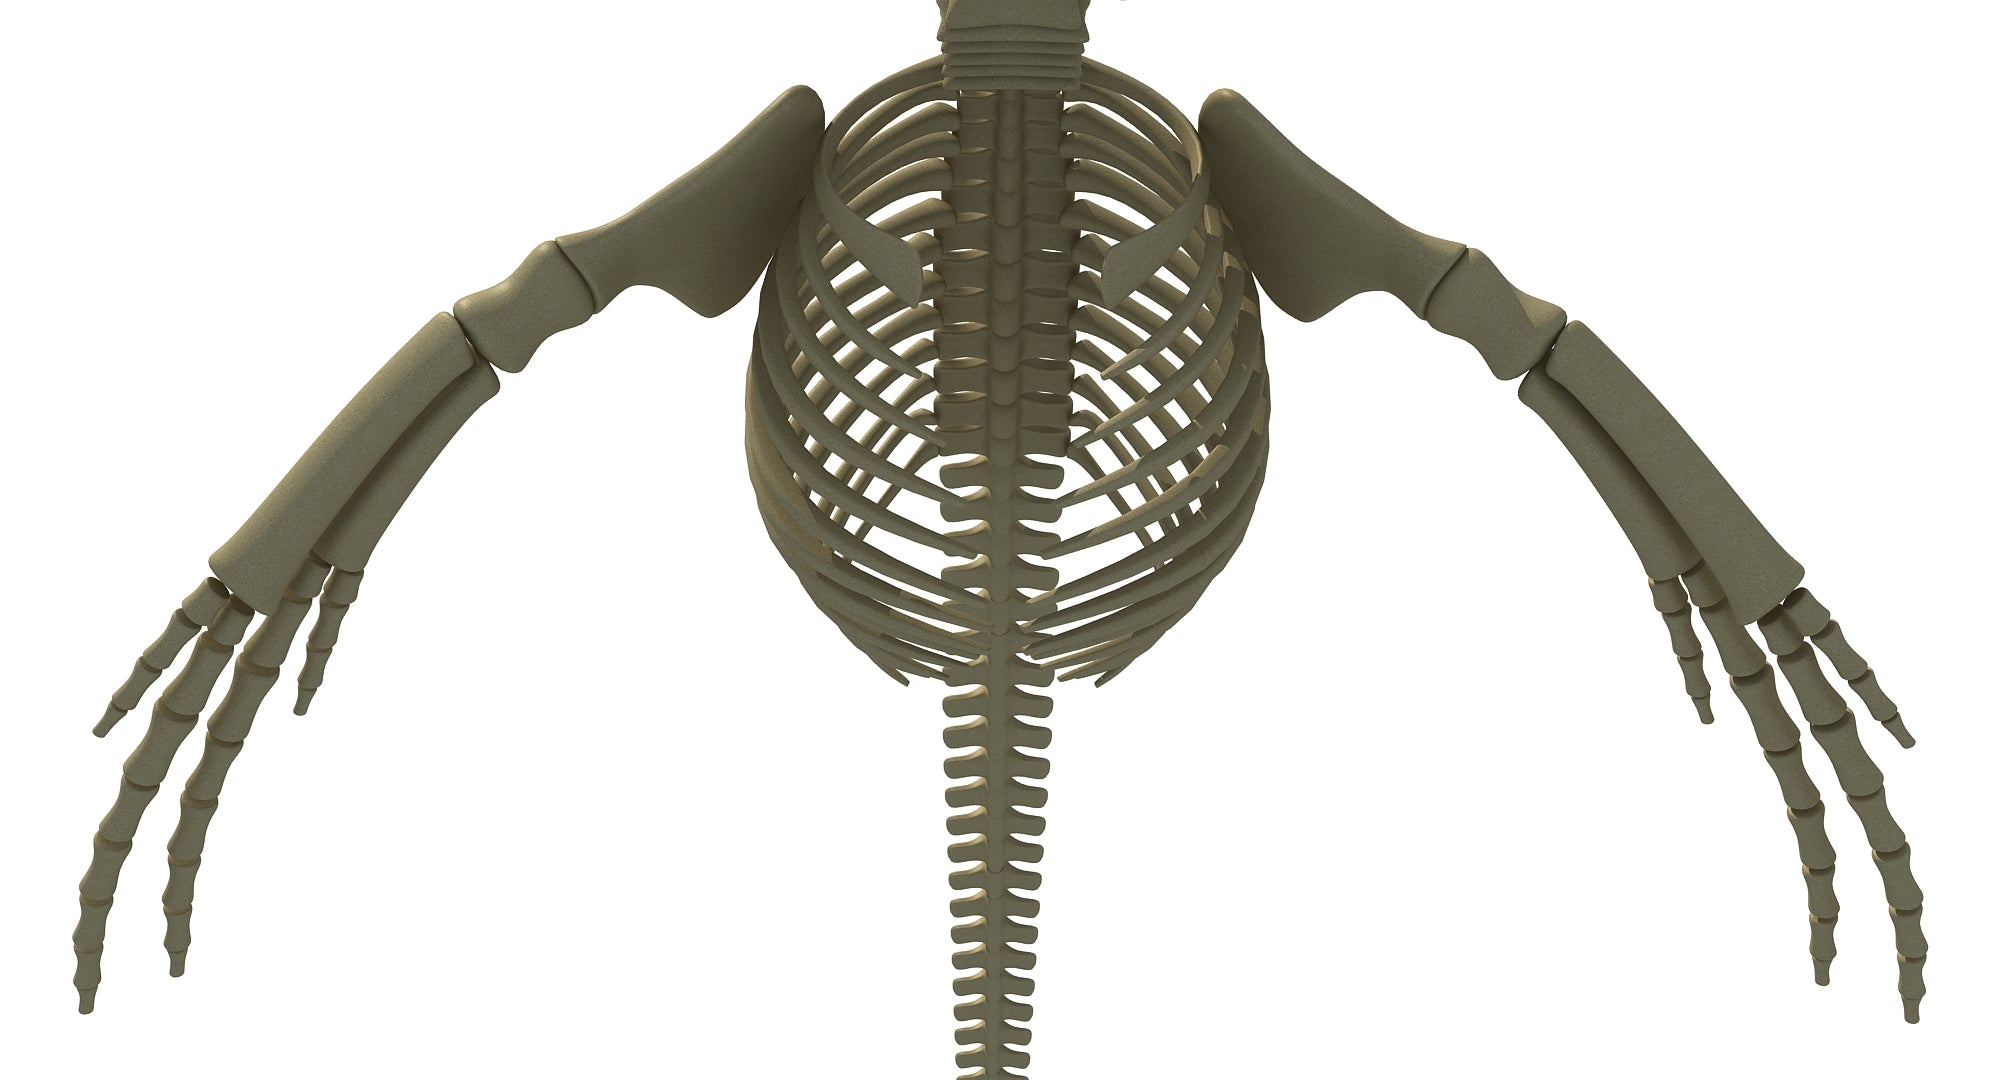 Humpback Whale Skeleton